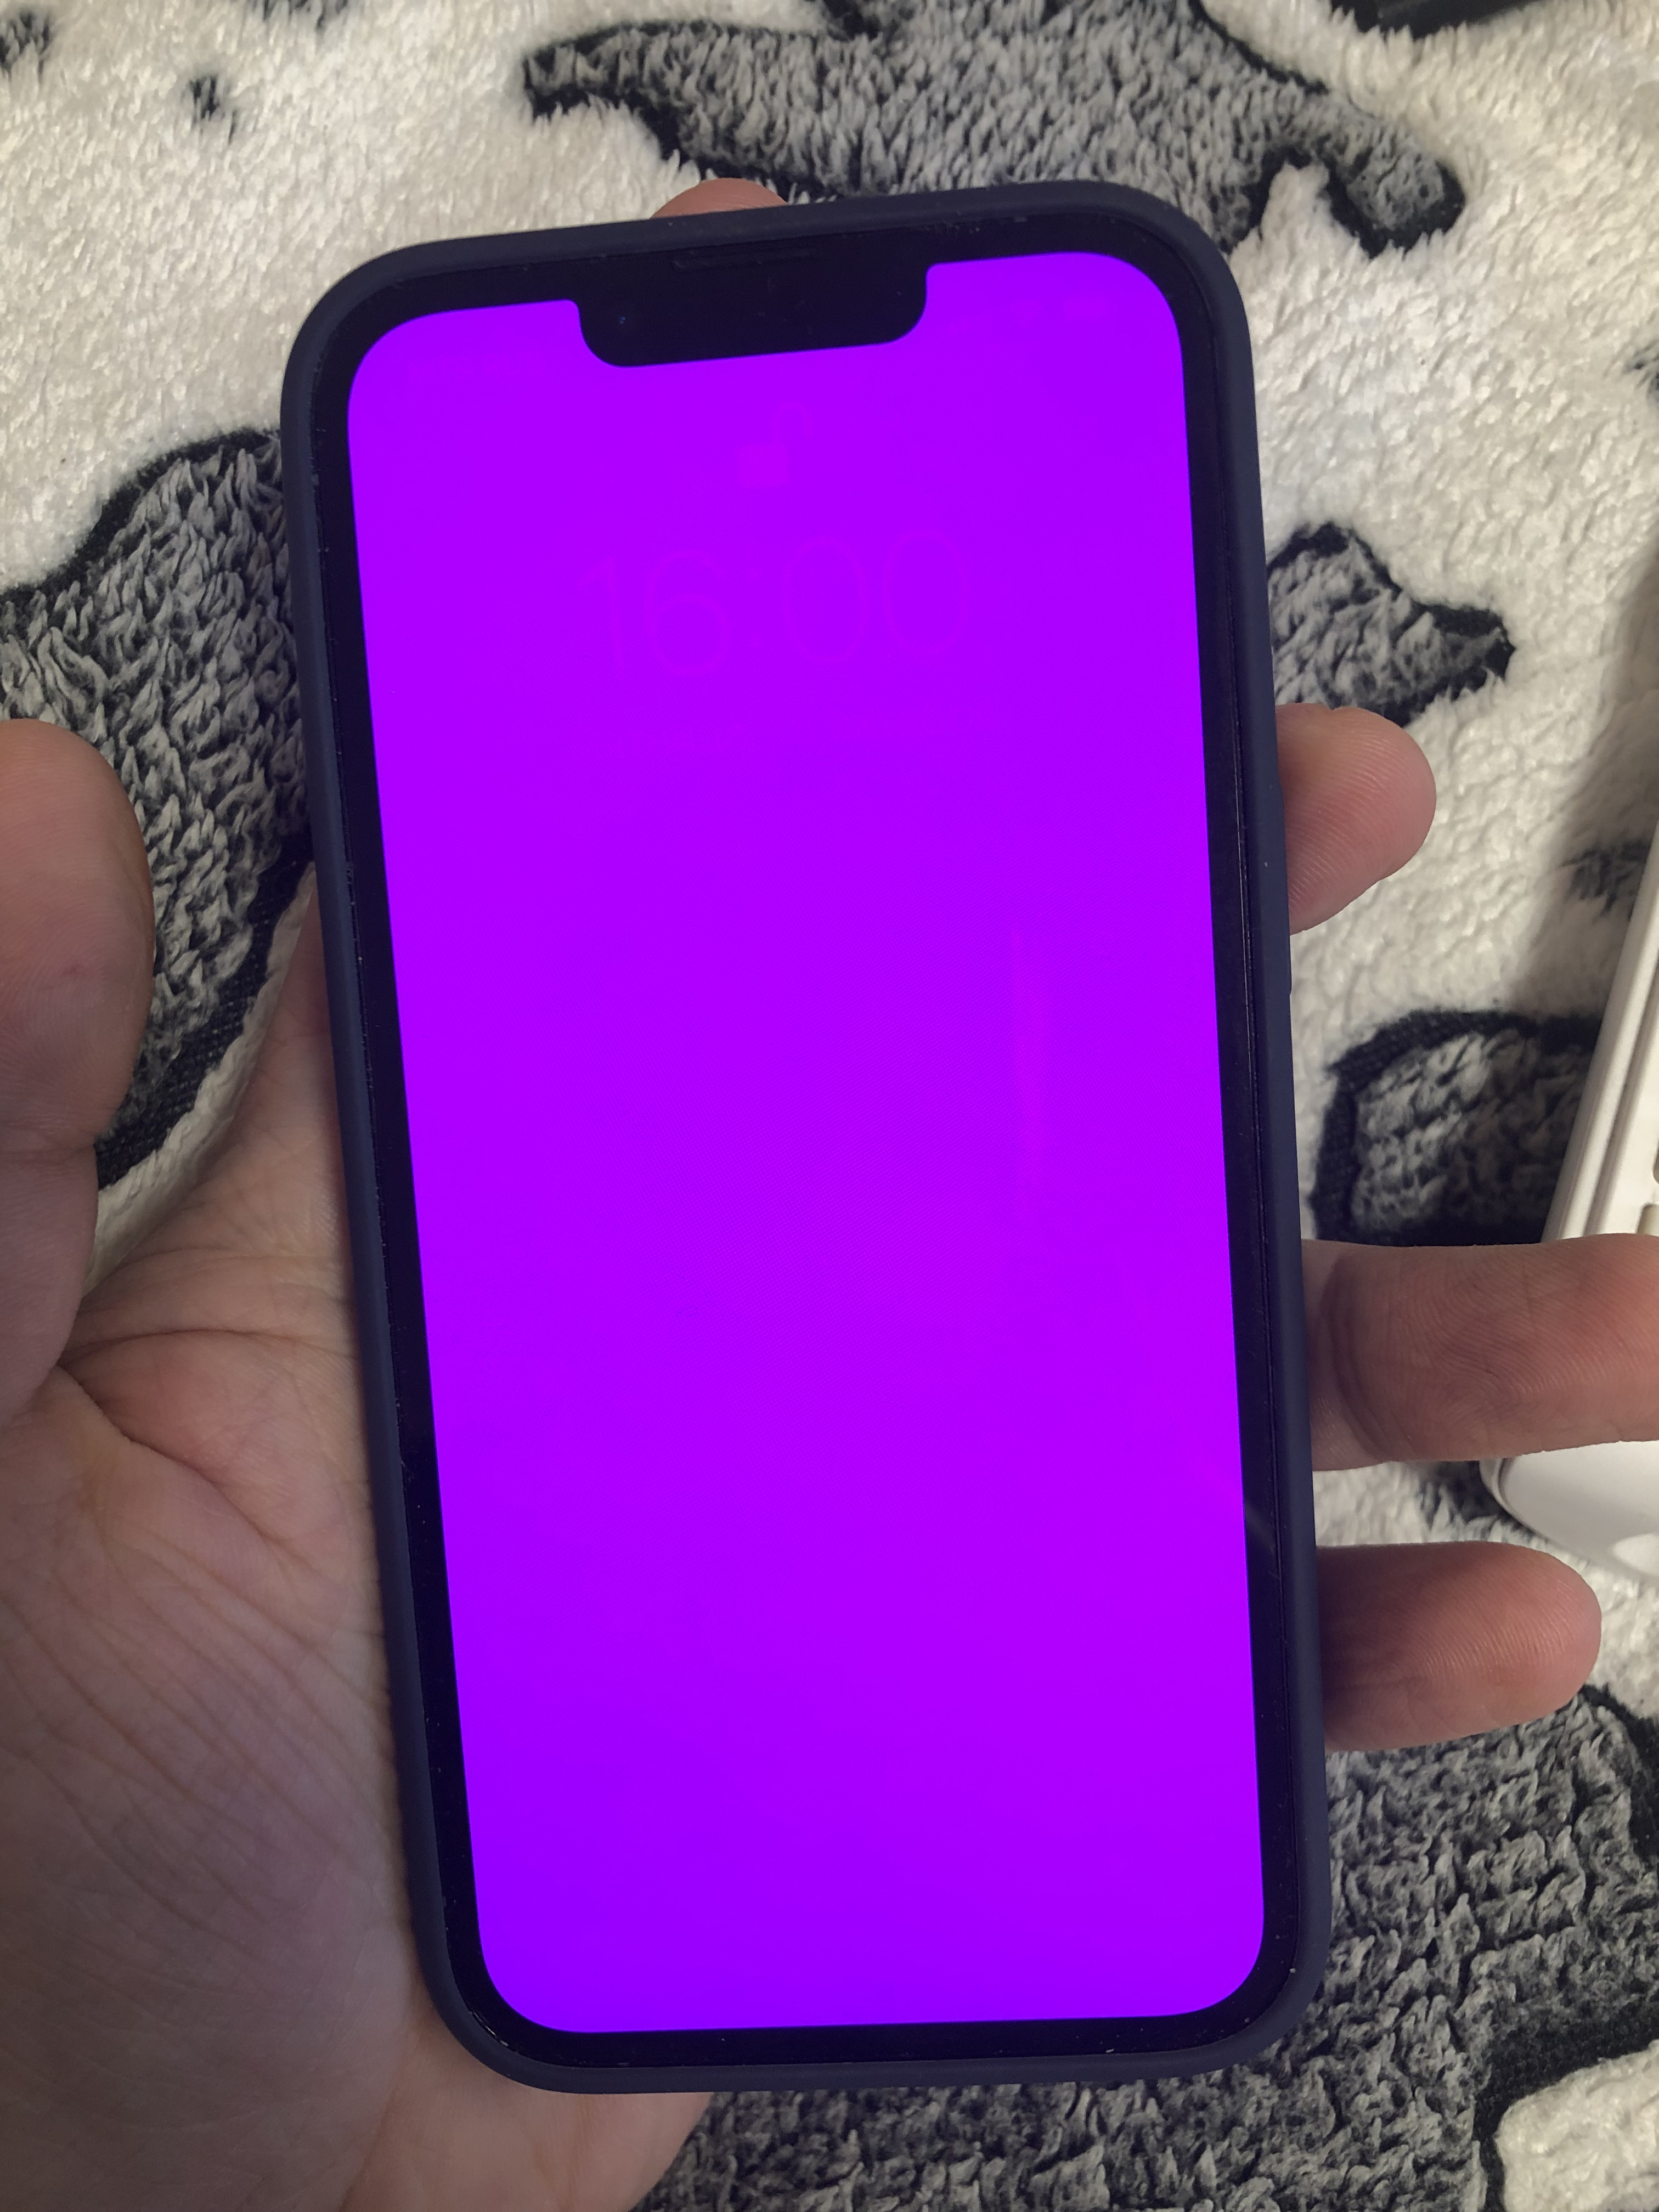 alt="iPhone 13 Pink Screen"